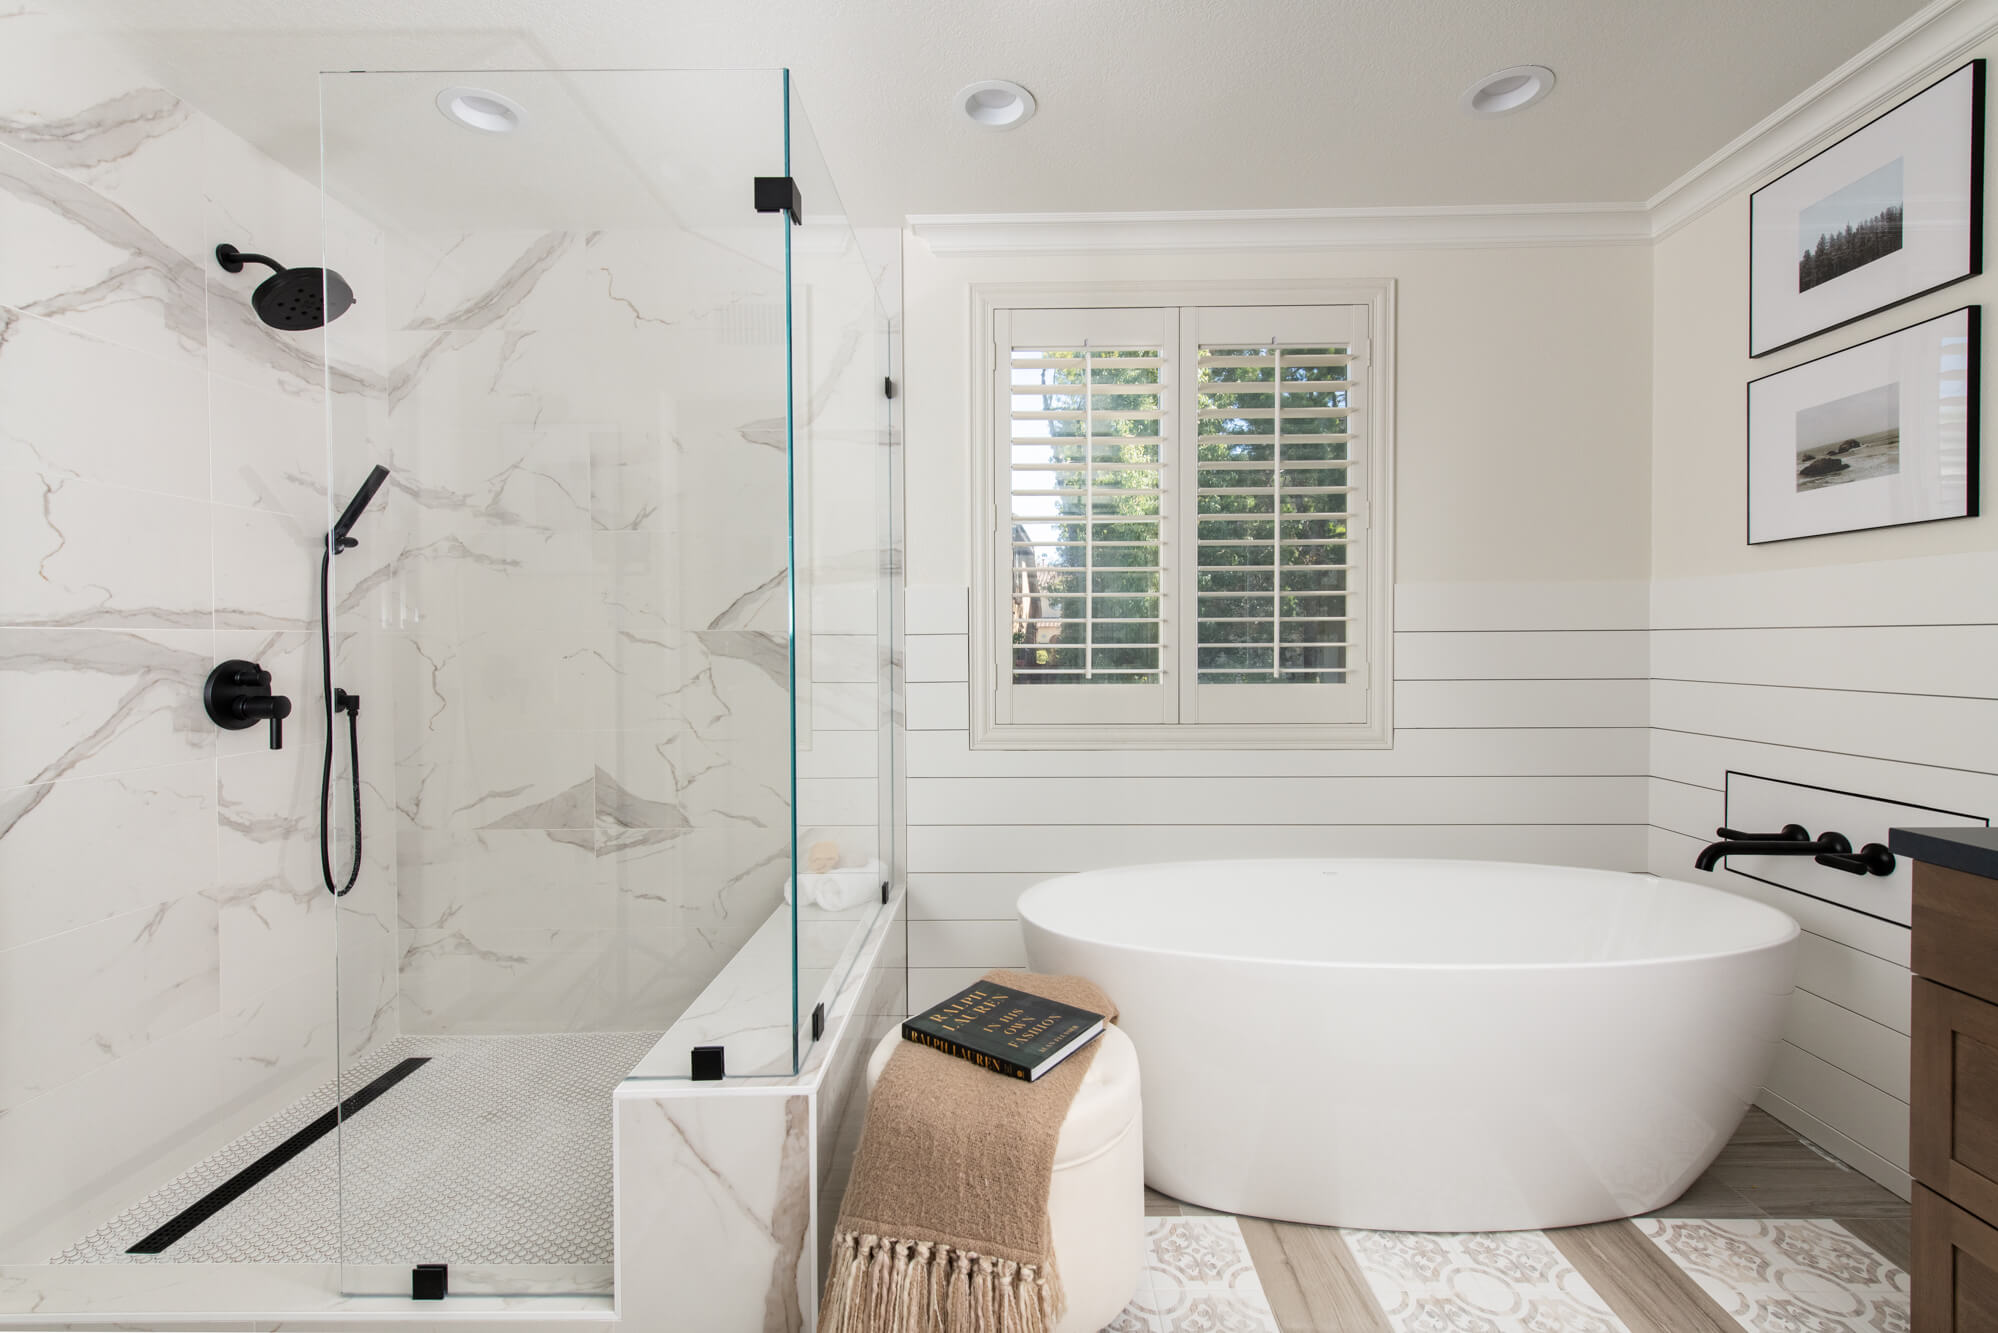 Porcelain Shower Tile With Linear Drain For Modern Design In Bathroom Renovation 